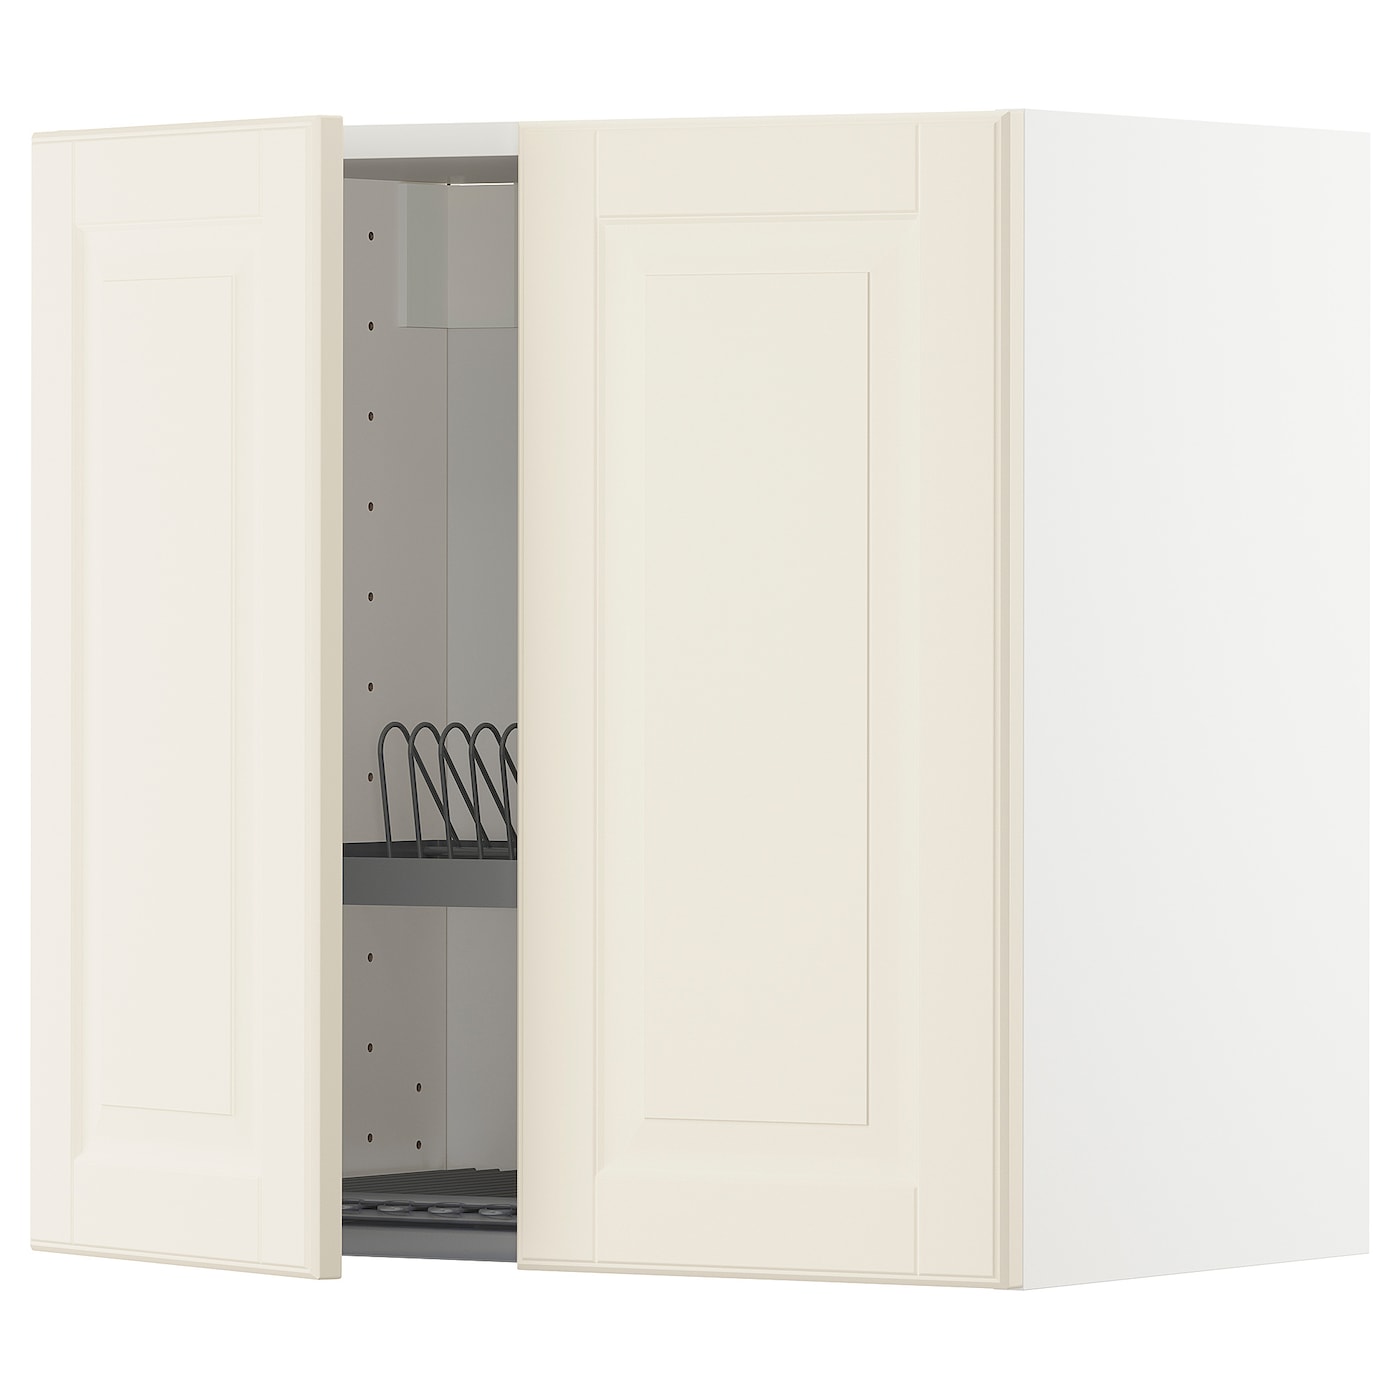 Навесной шкаф с сушилкой - METOD IKEA/ МЕТОД ИКЕА, 60х60 см, бежевый/белый